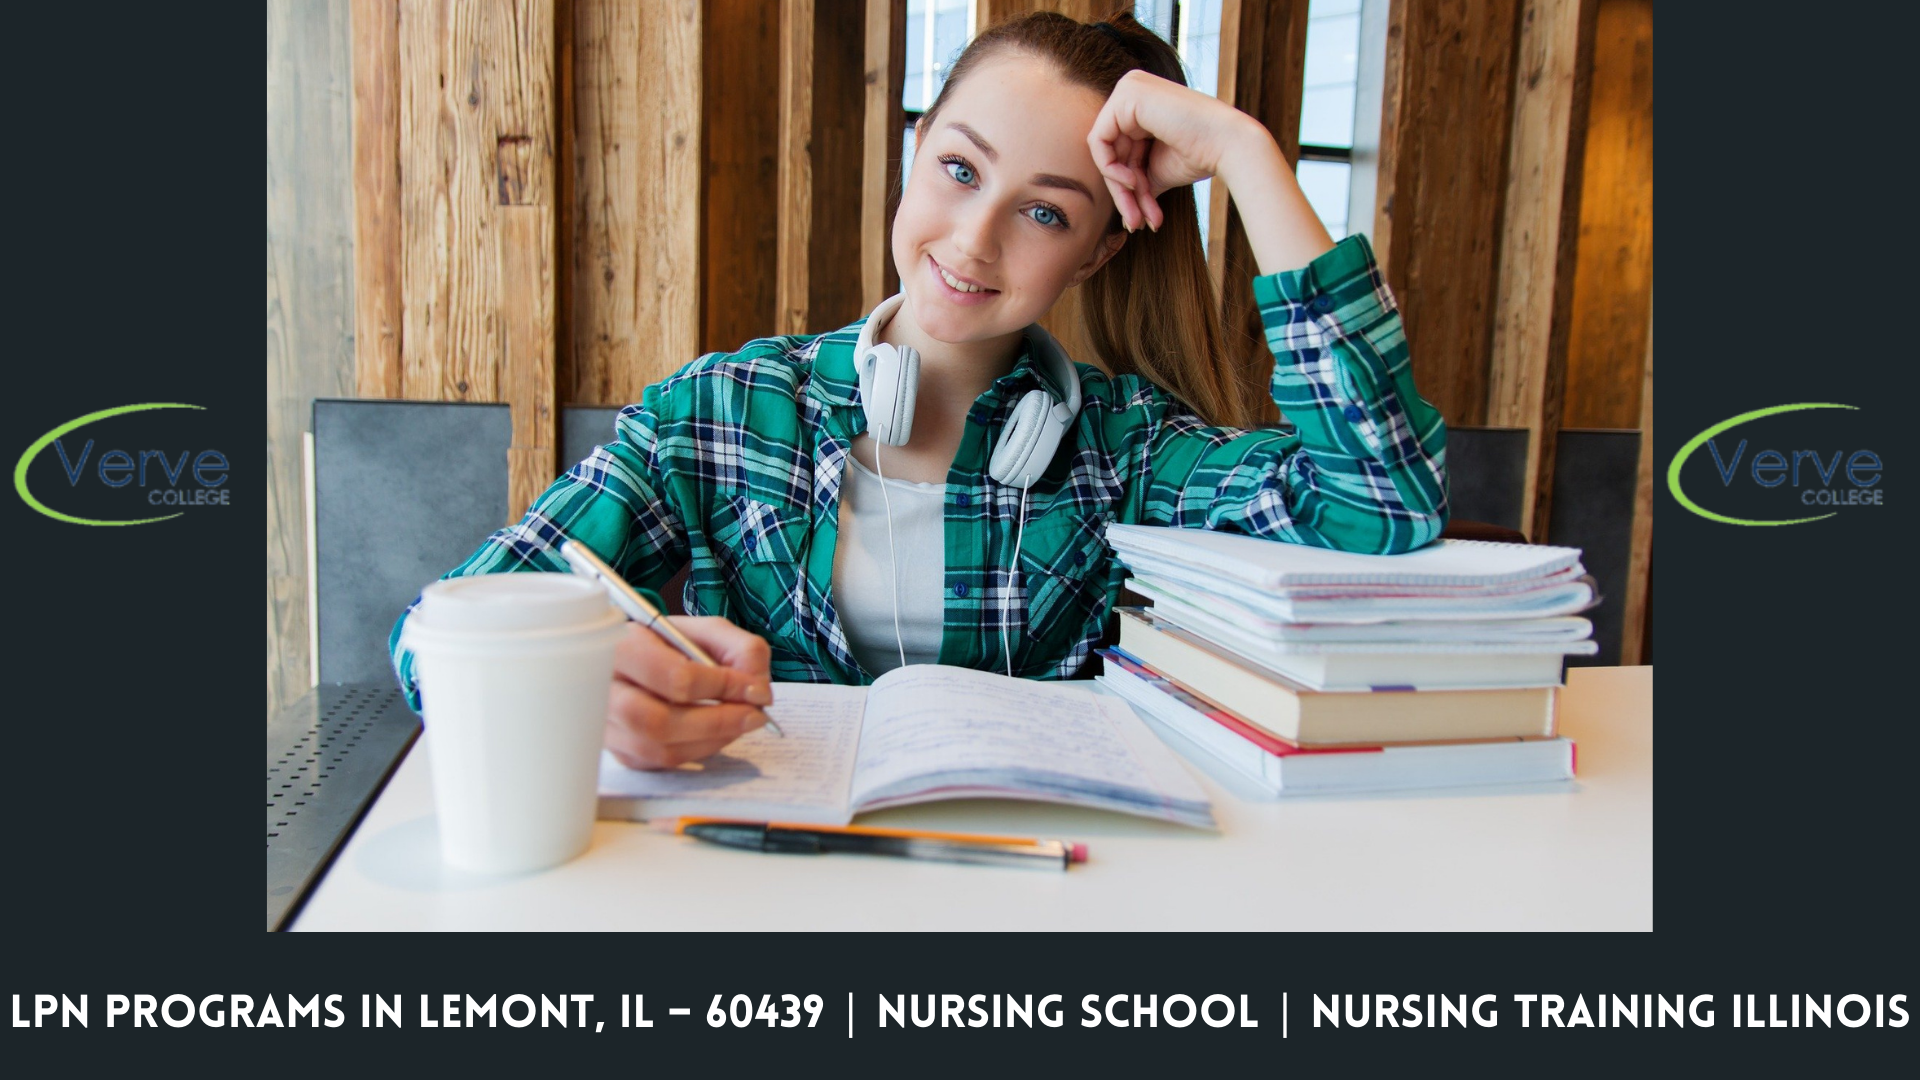 LPN Programs in Lemont, IL – 60439 | Nursing School | Nursing Training Illinois